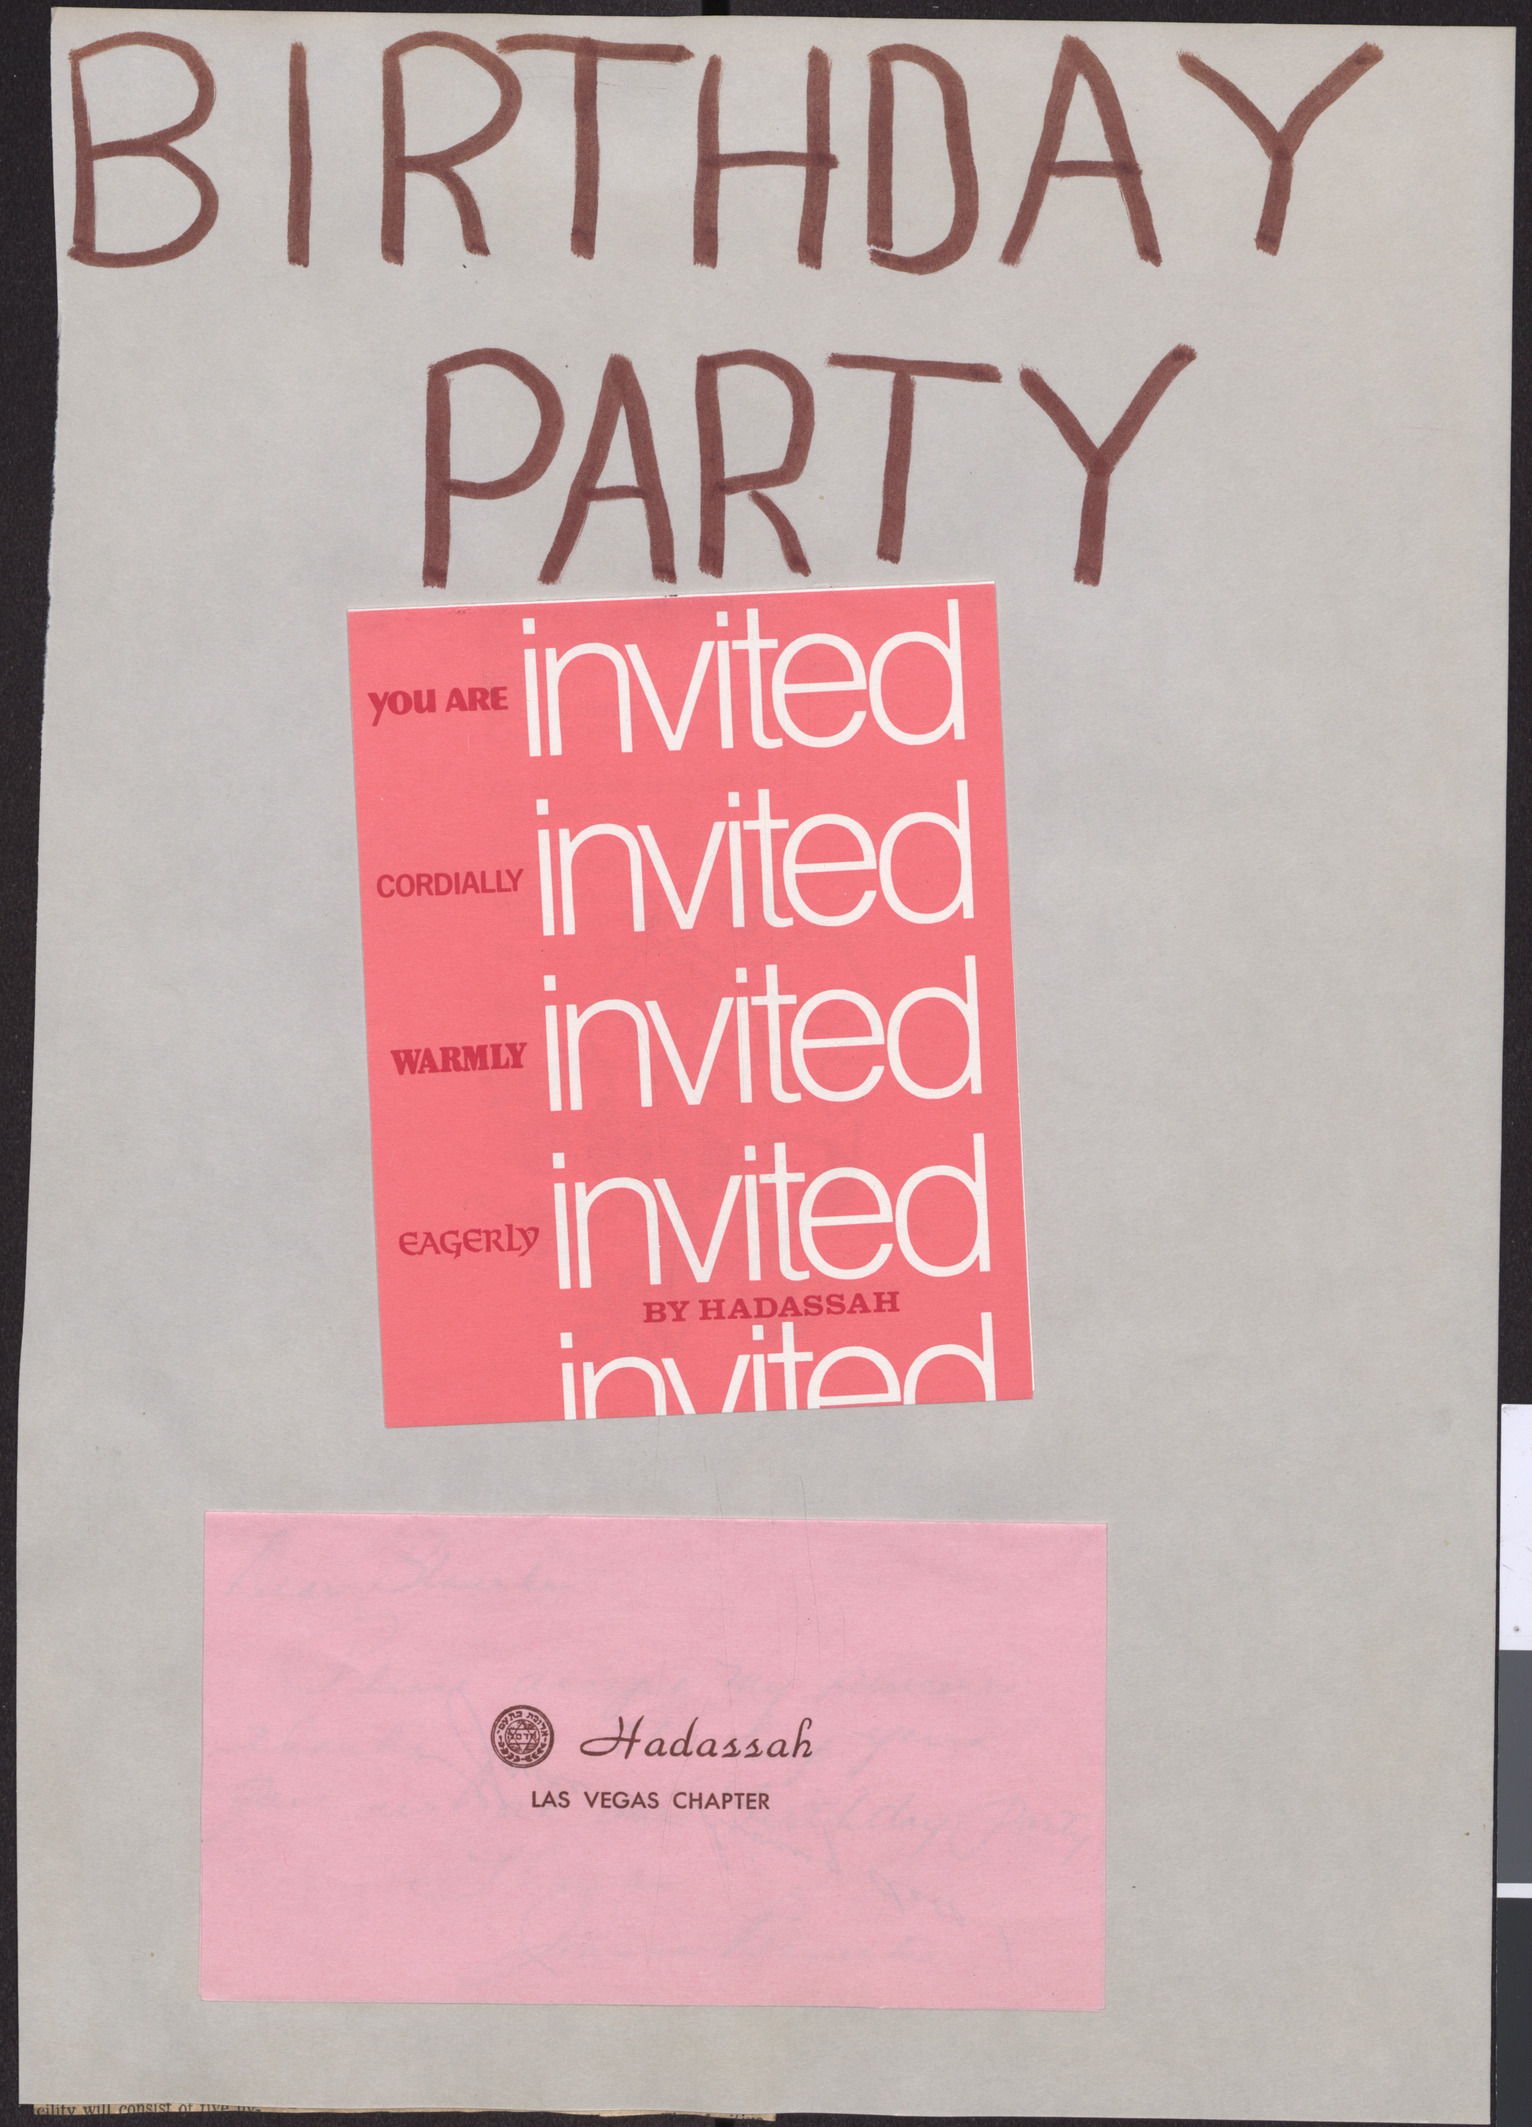 Hadassah birthday party invitation and note, 1972